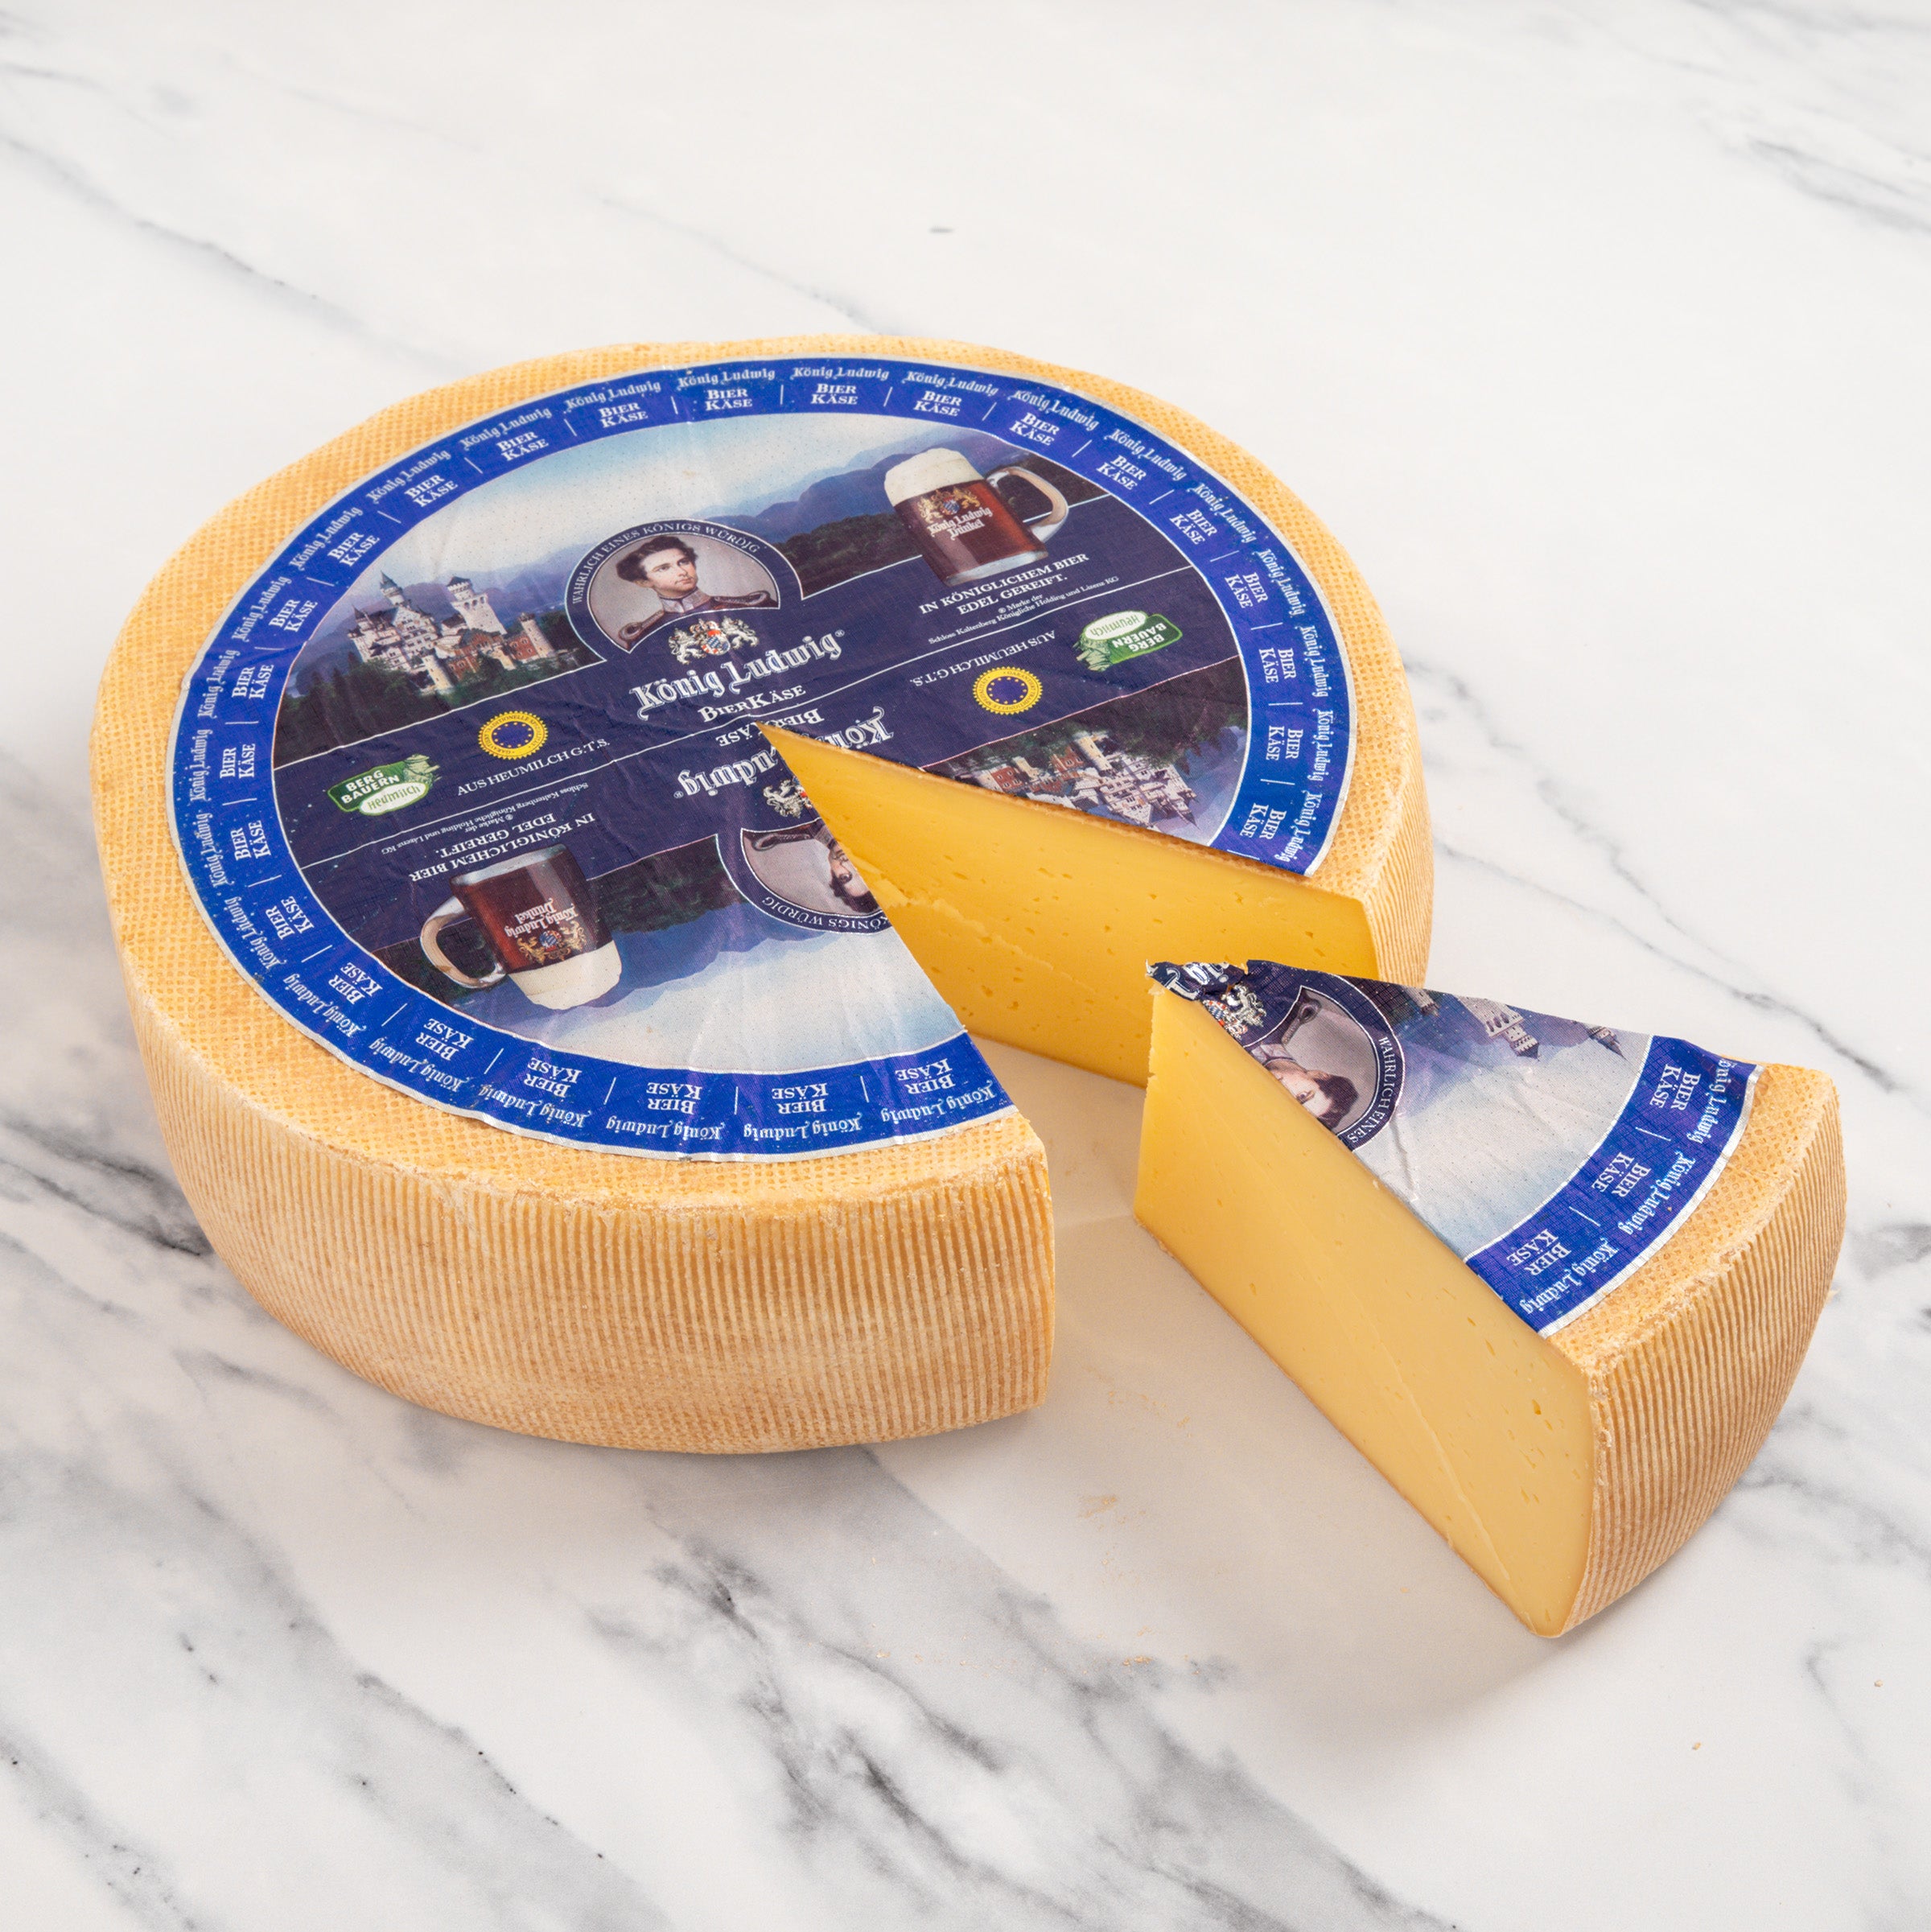 igourmet_2314S_king Ludwig Bavarian beer cheese_cheese